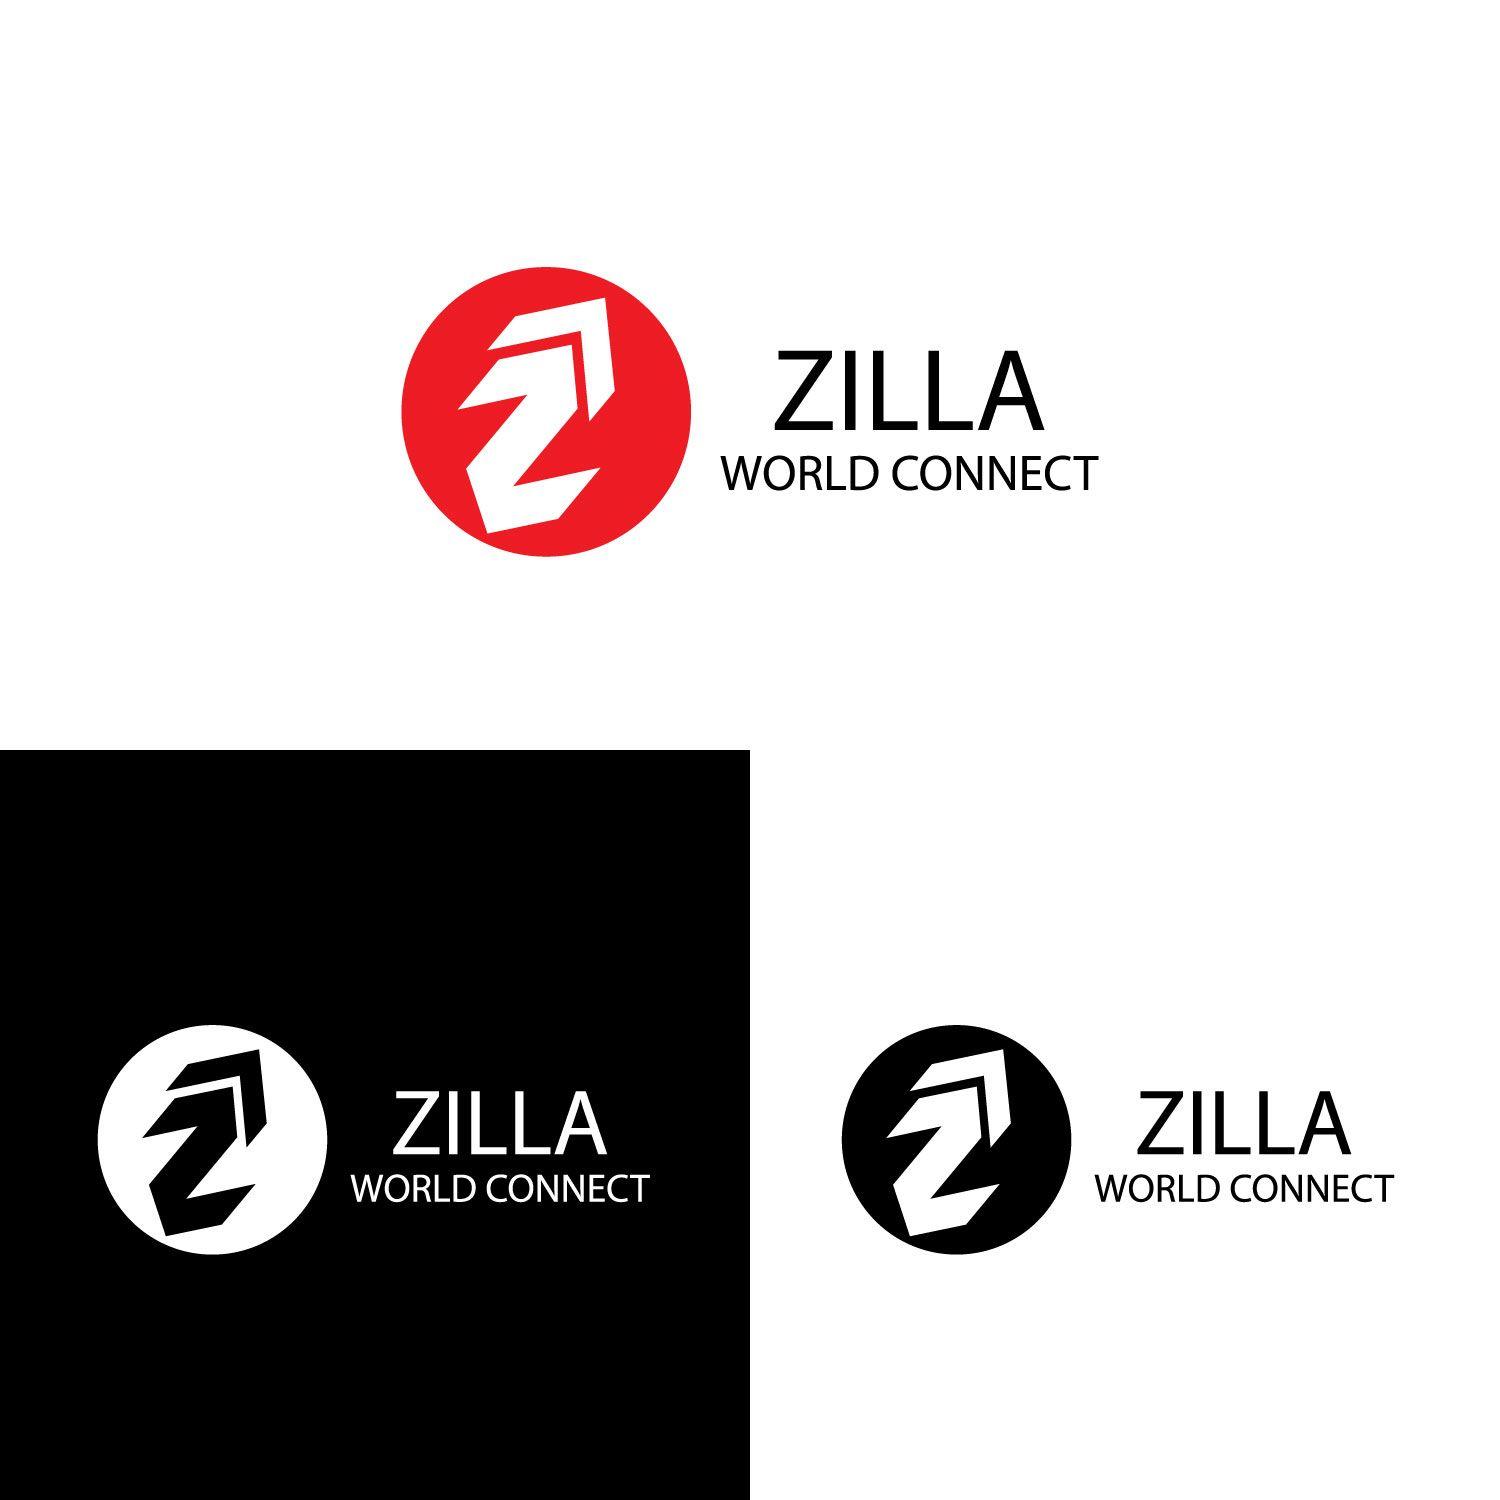 Zilla Logo - Professional, Bold, Startup Logo Design for Zilla World Connect